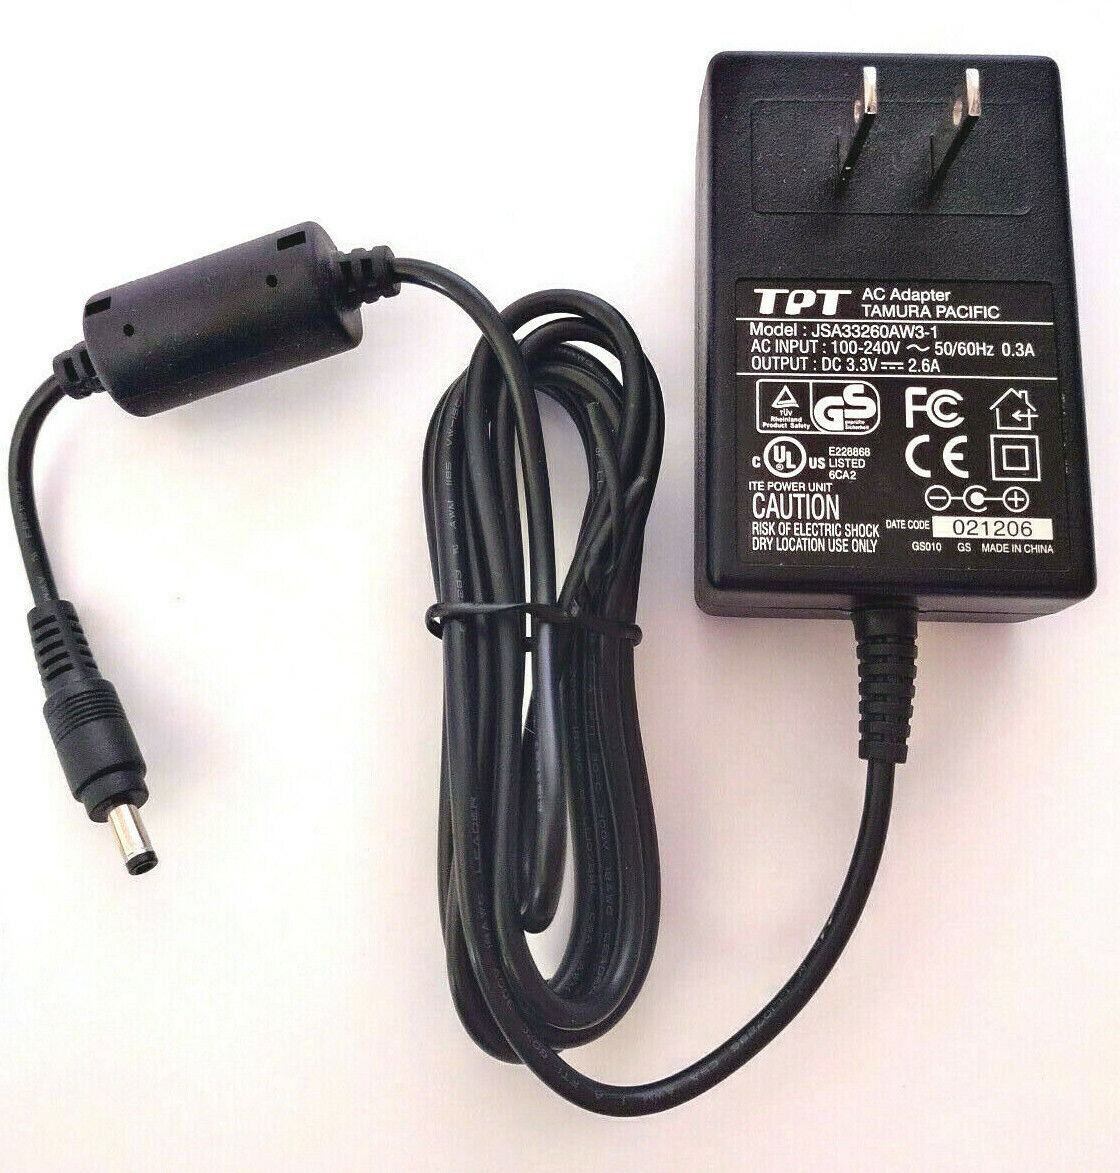 *Brand NEW*For Yamaha PSR170 PSR-275 Keyboard Wall Charger AC Adapter Power Supply Cord PSU